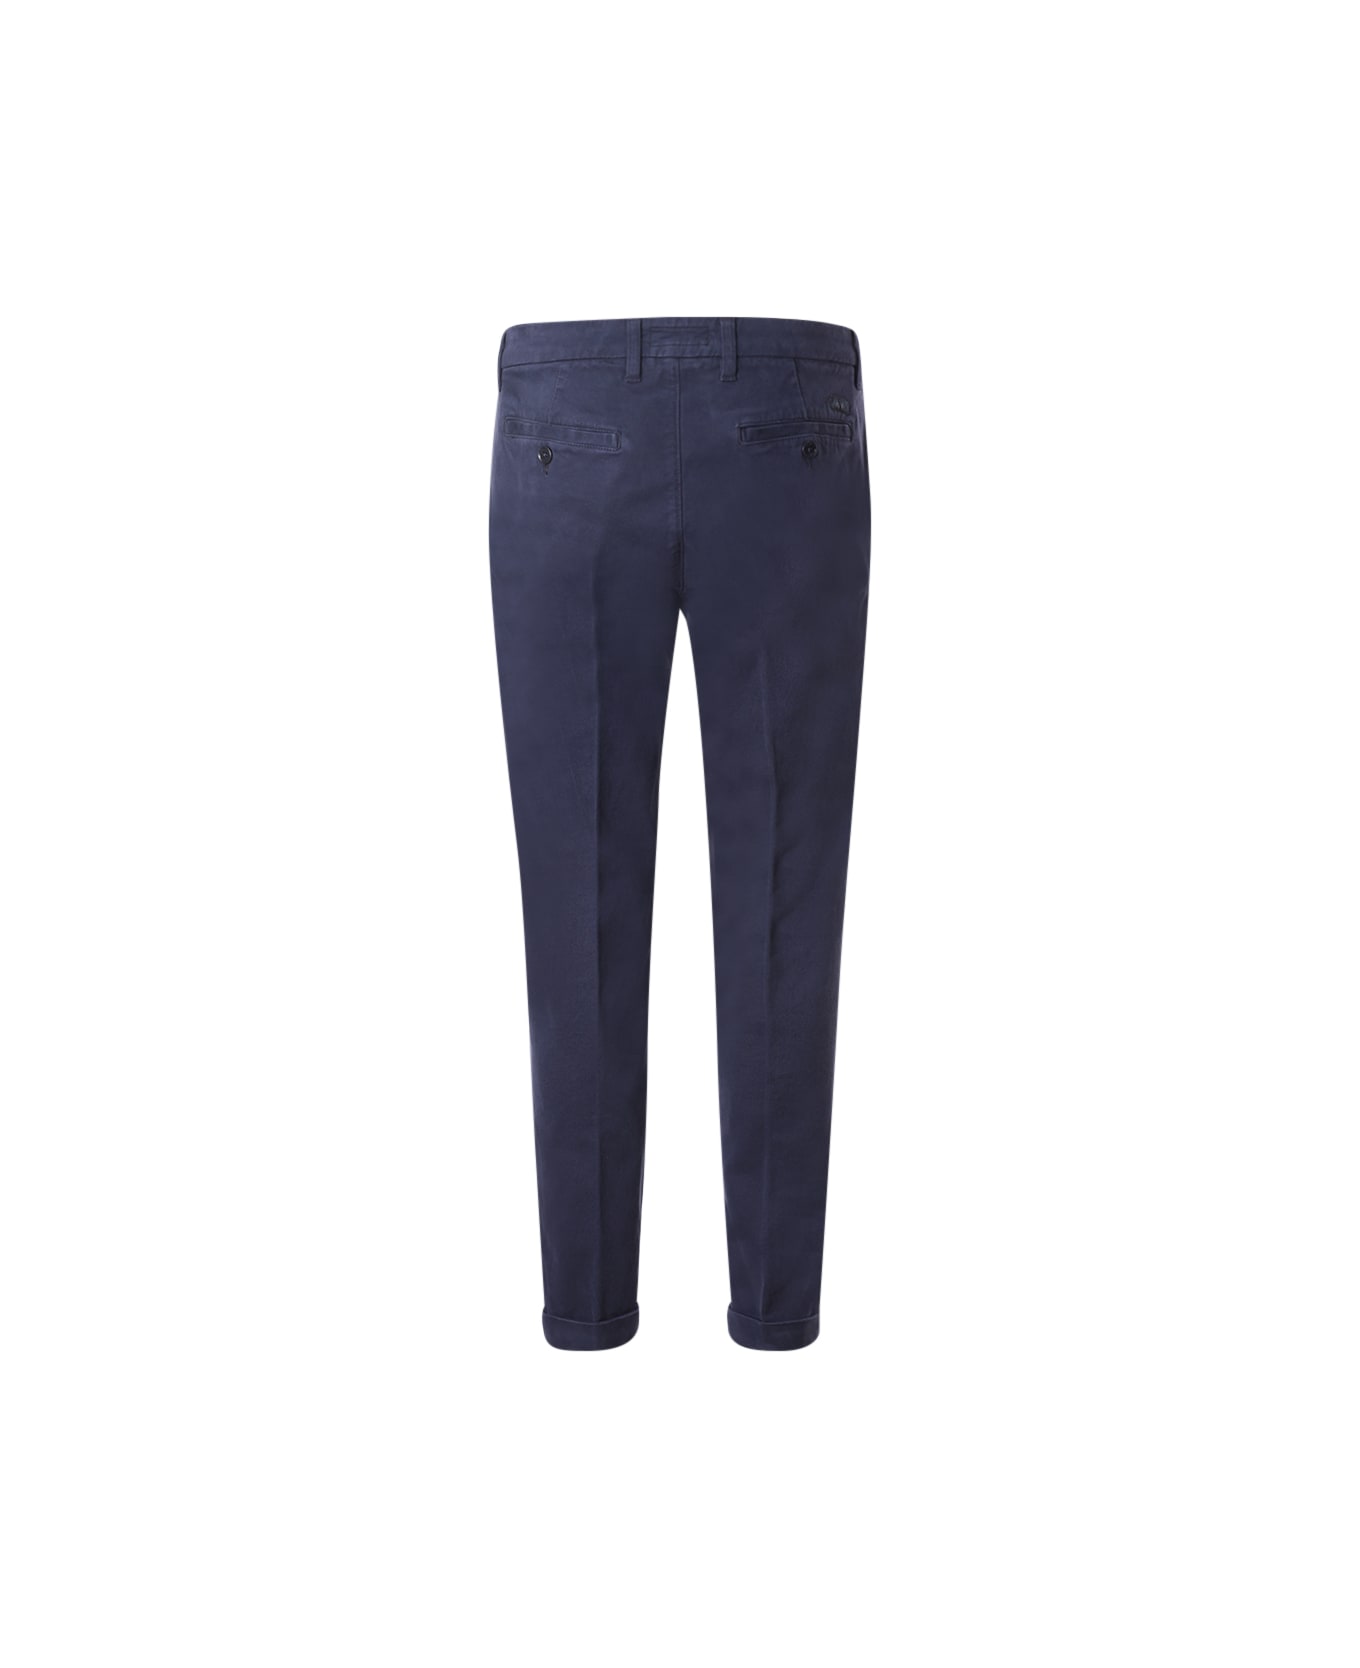 Fay Navy Blue Capri Cotton Trousers Pants - Blue ボトムス